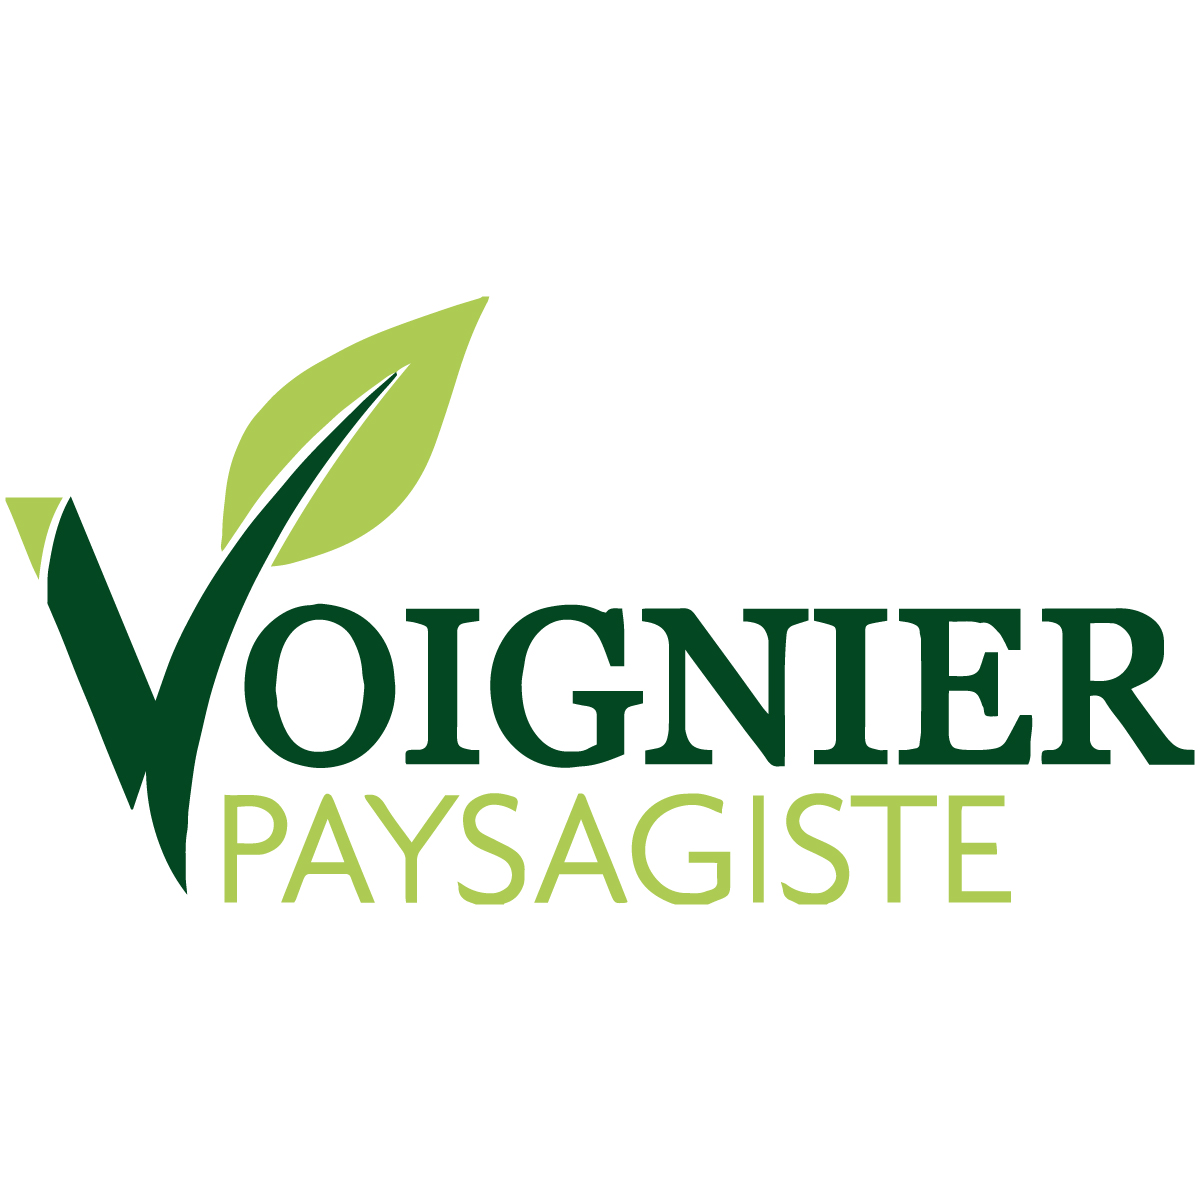 (c) Voignier-paysagiste.com